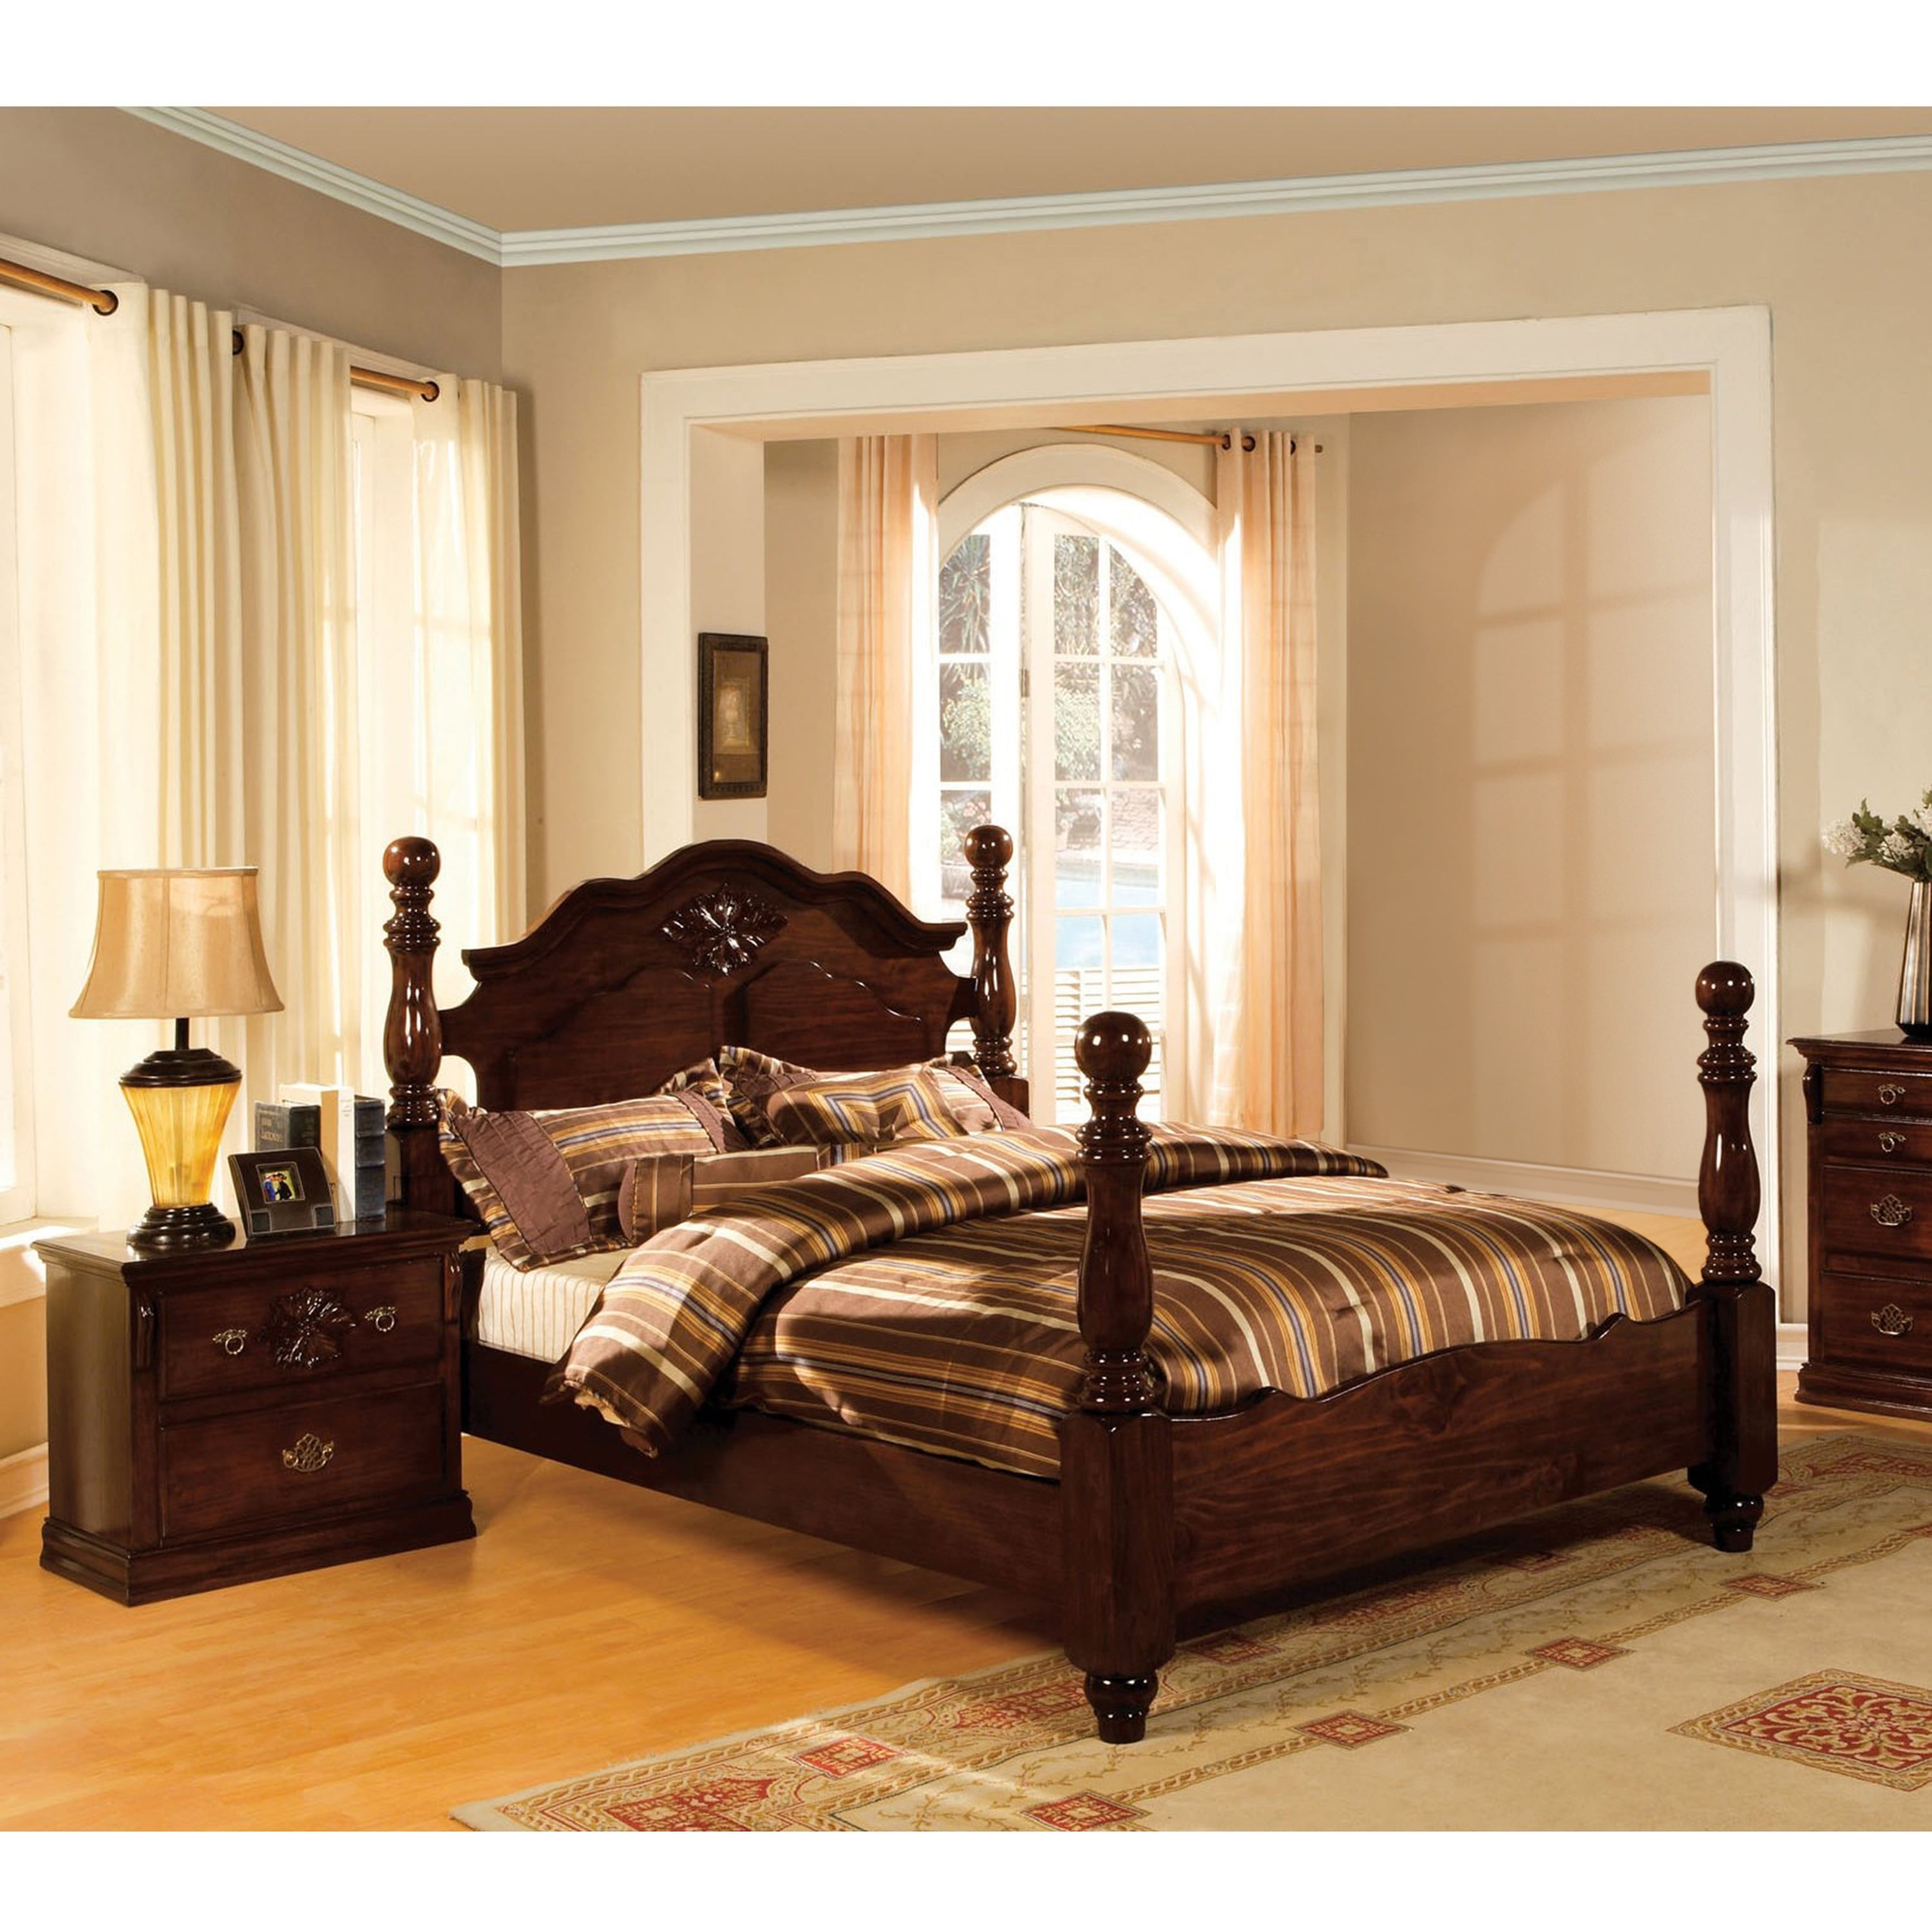 Foa Hemps 2pc Dark Pine Wood Bedroom, California King Bed Sets